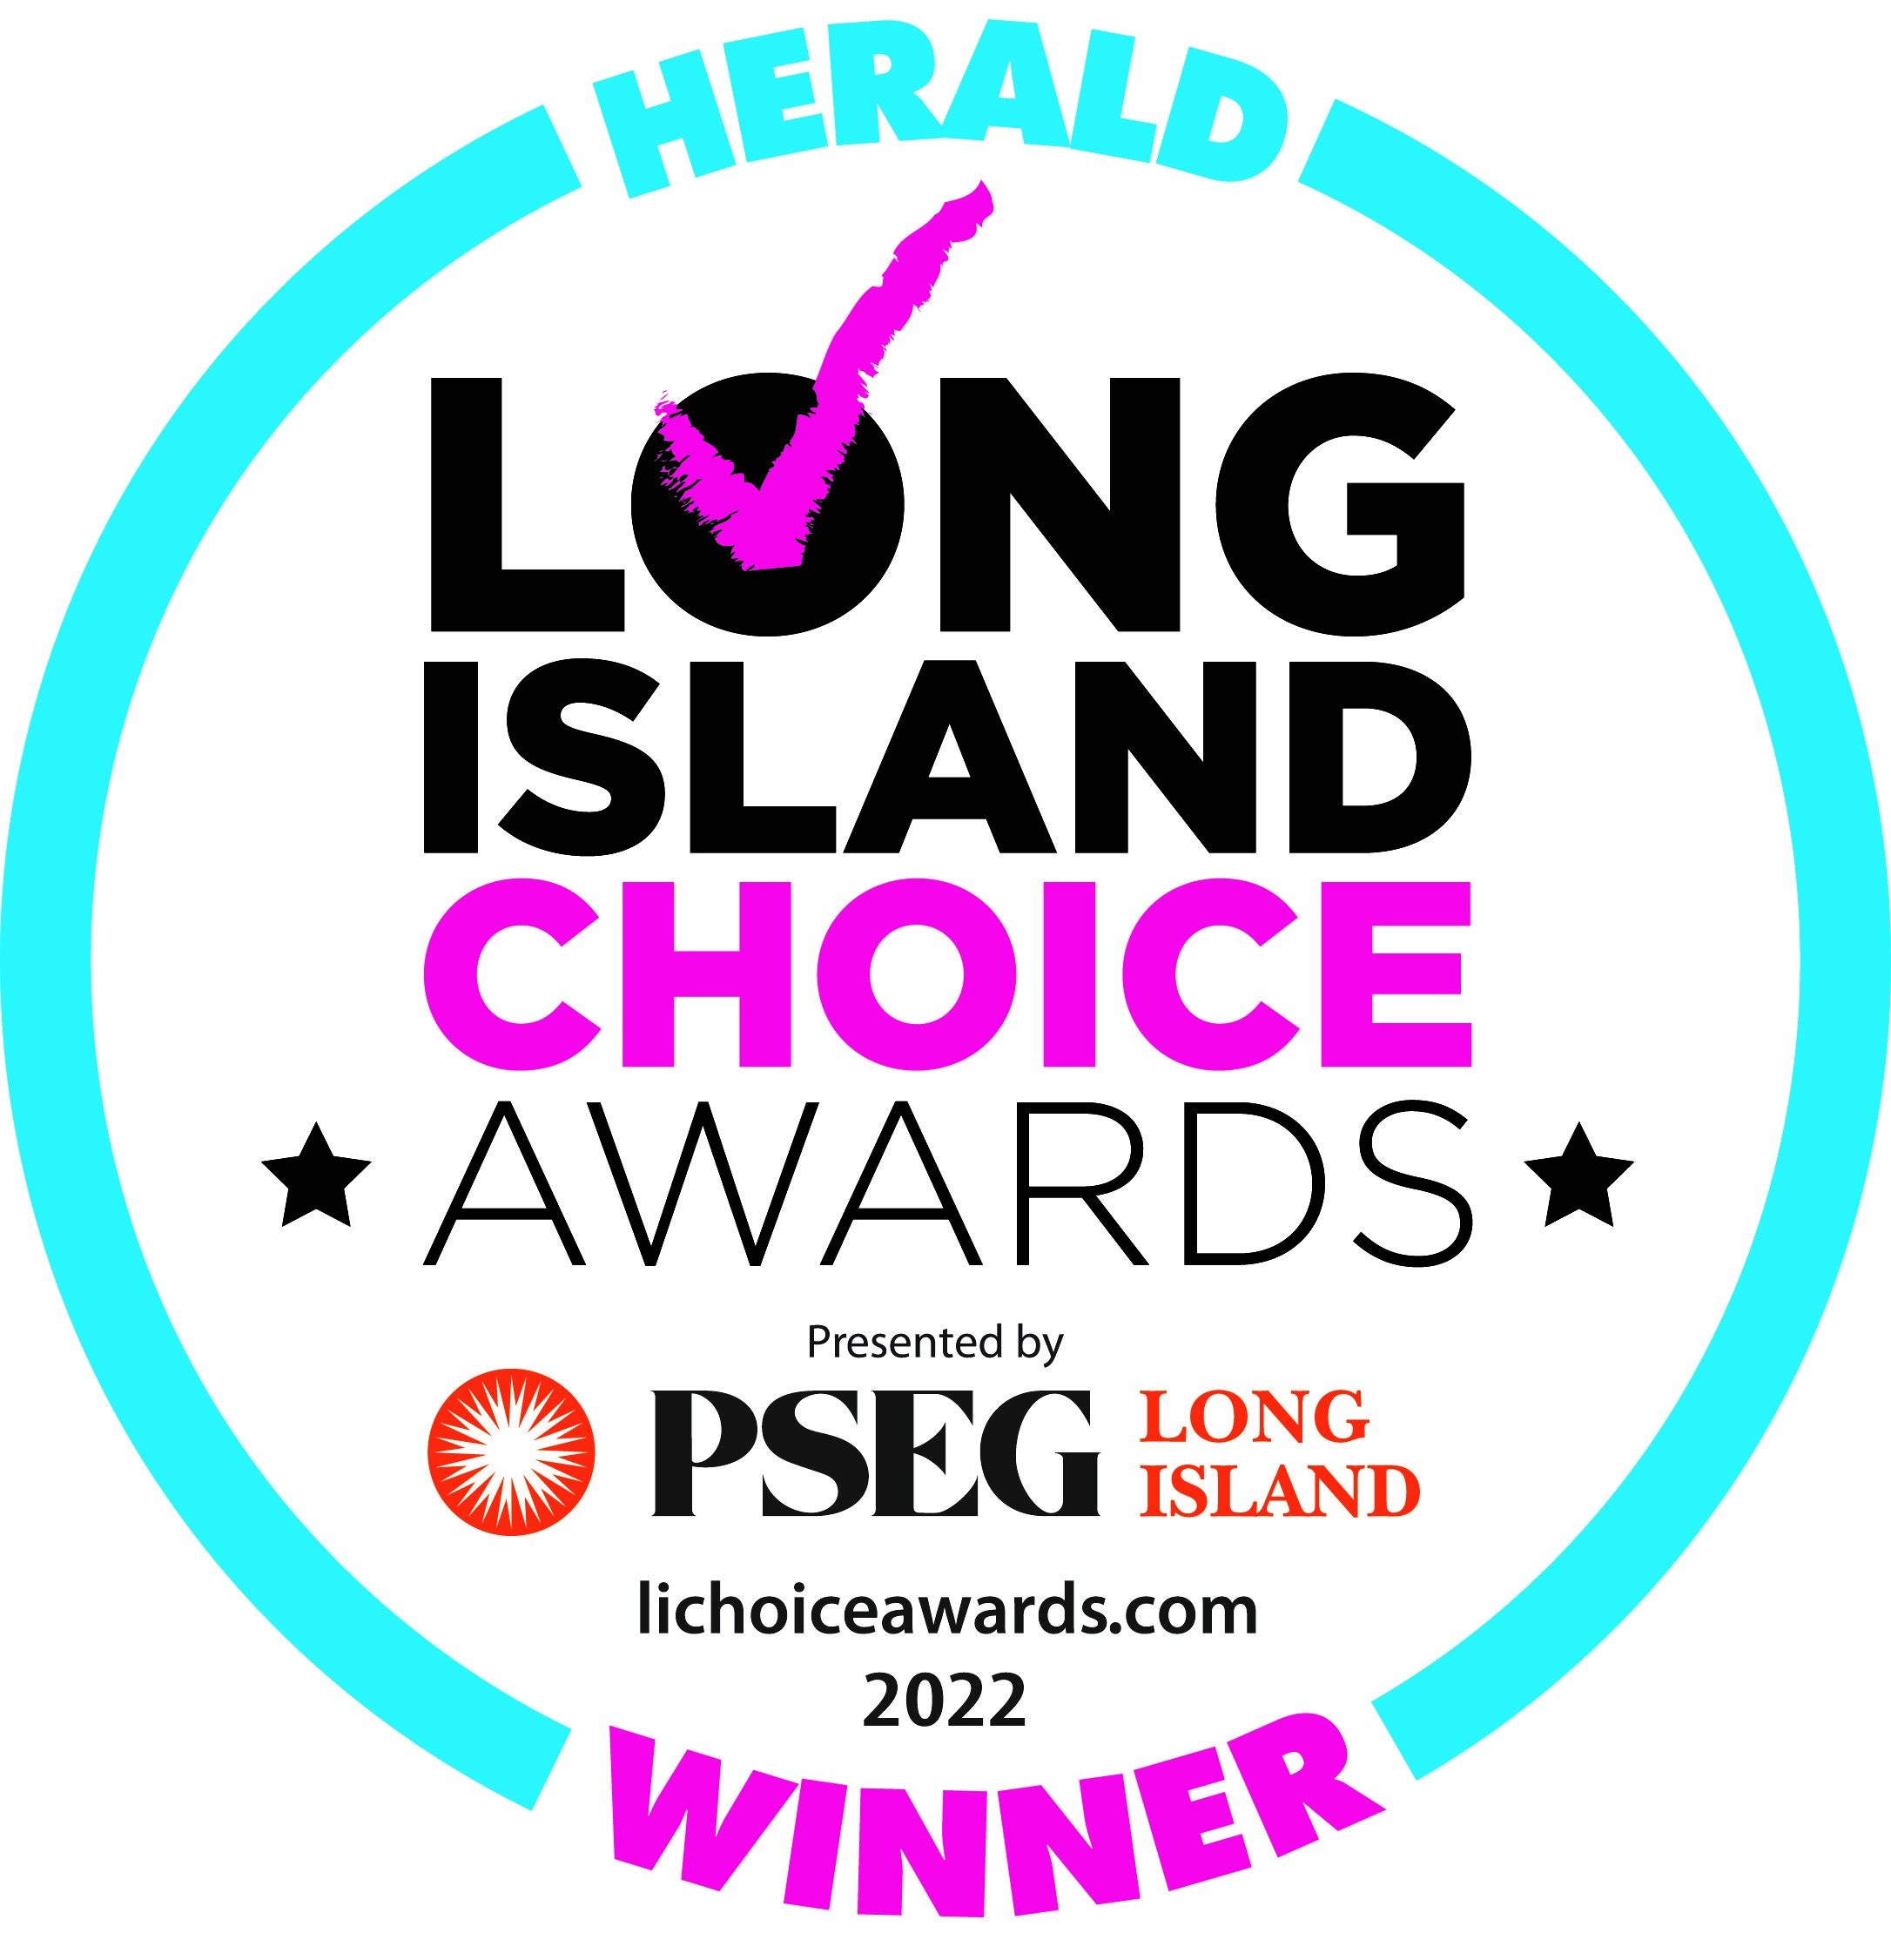 Long Island Choice Awards Winner 2022